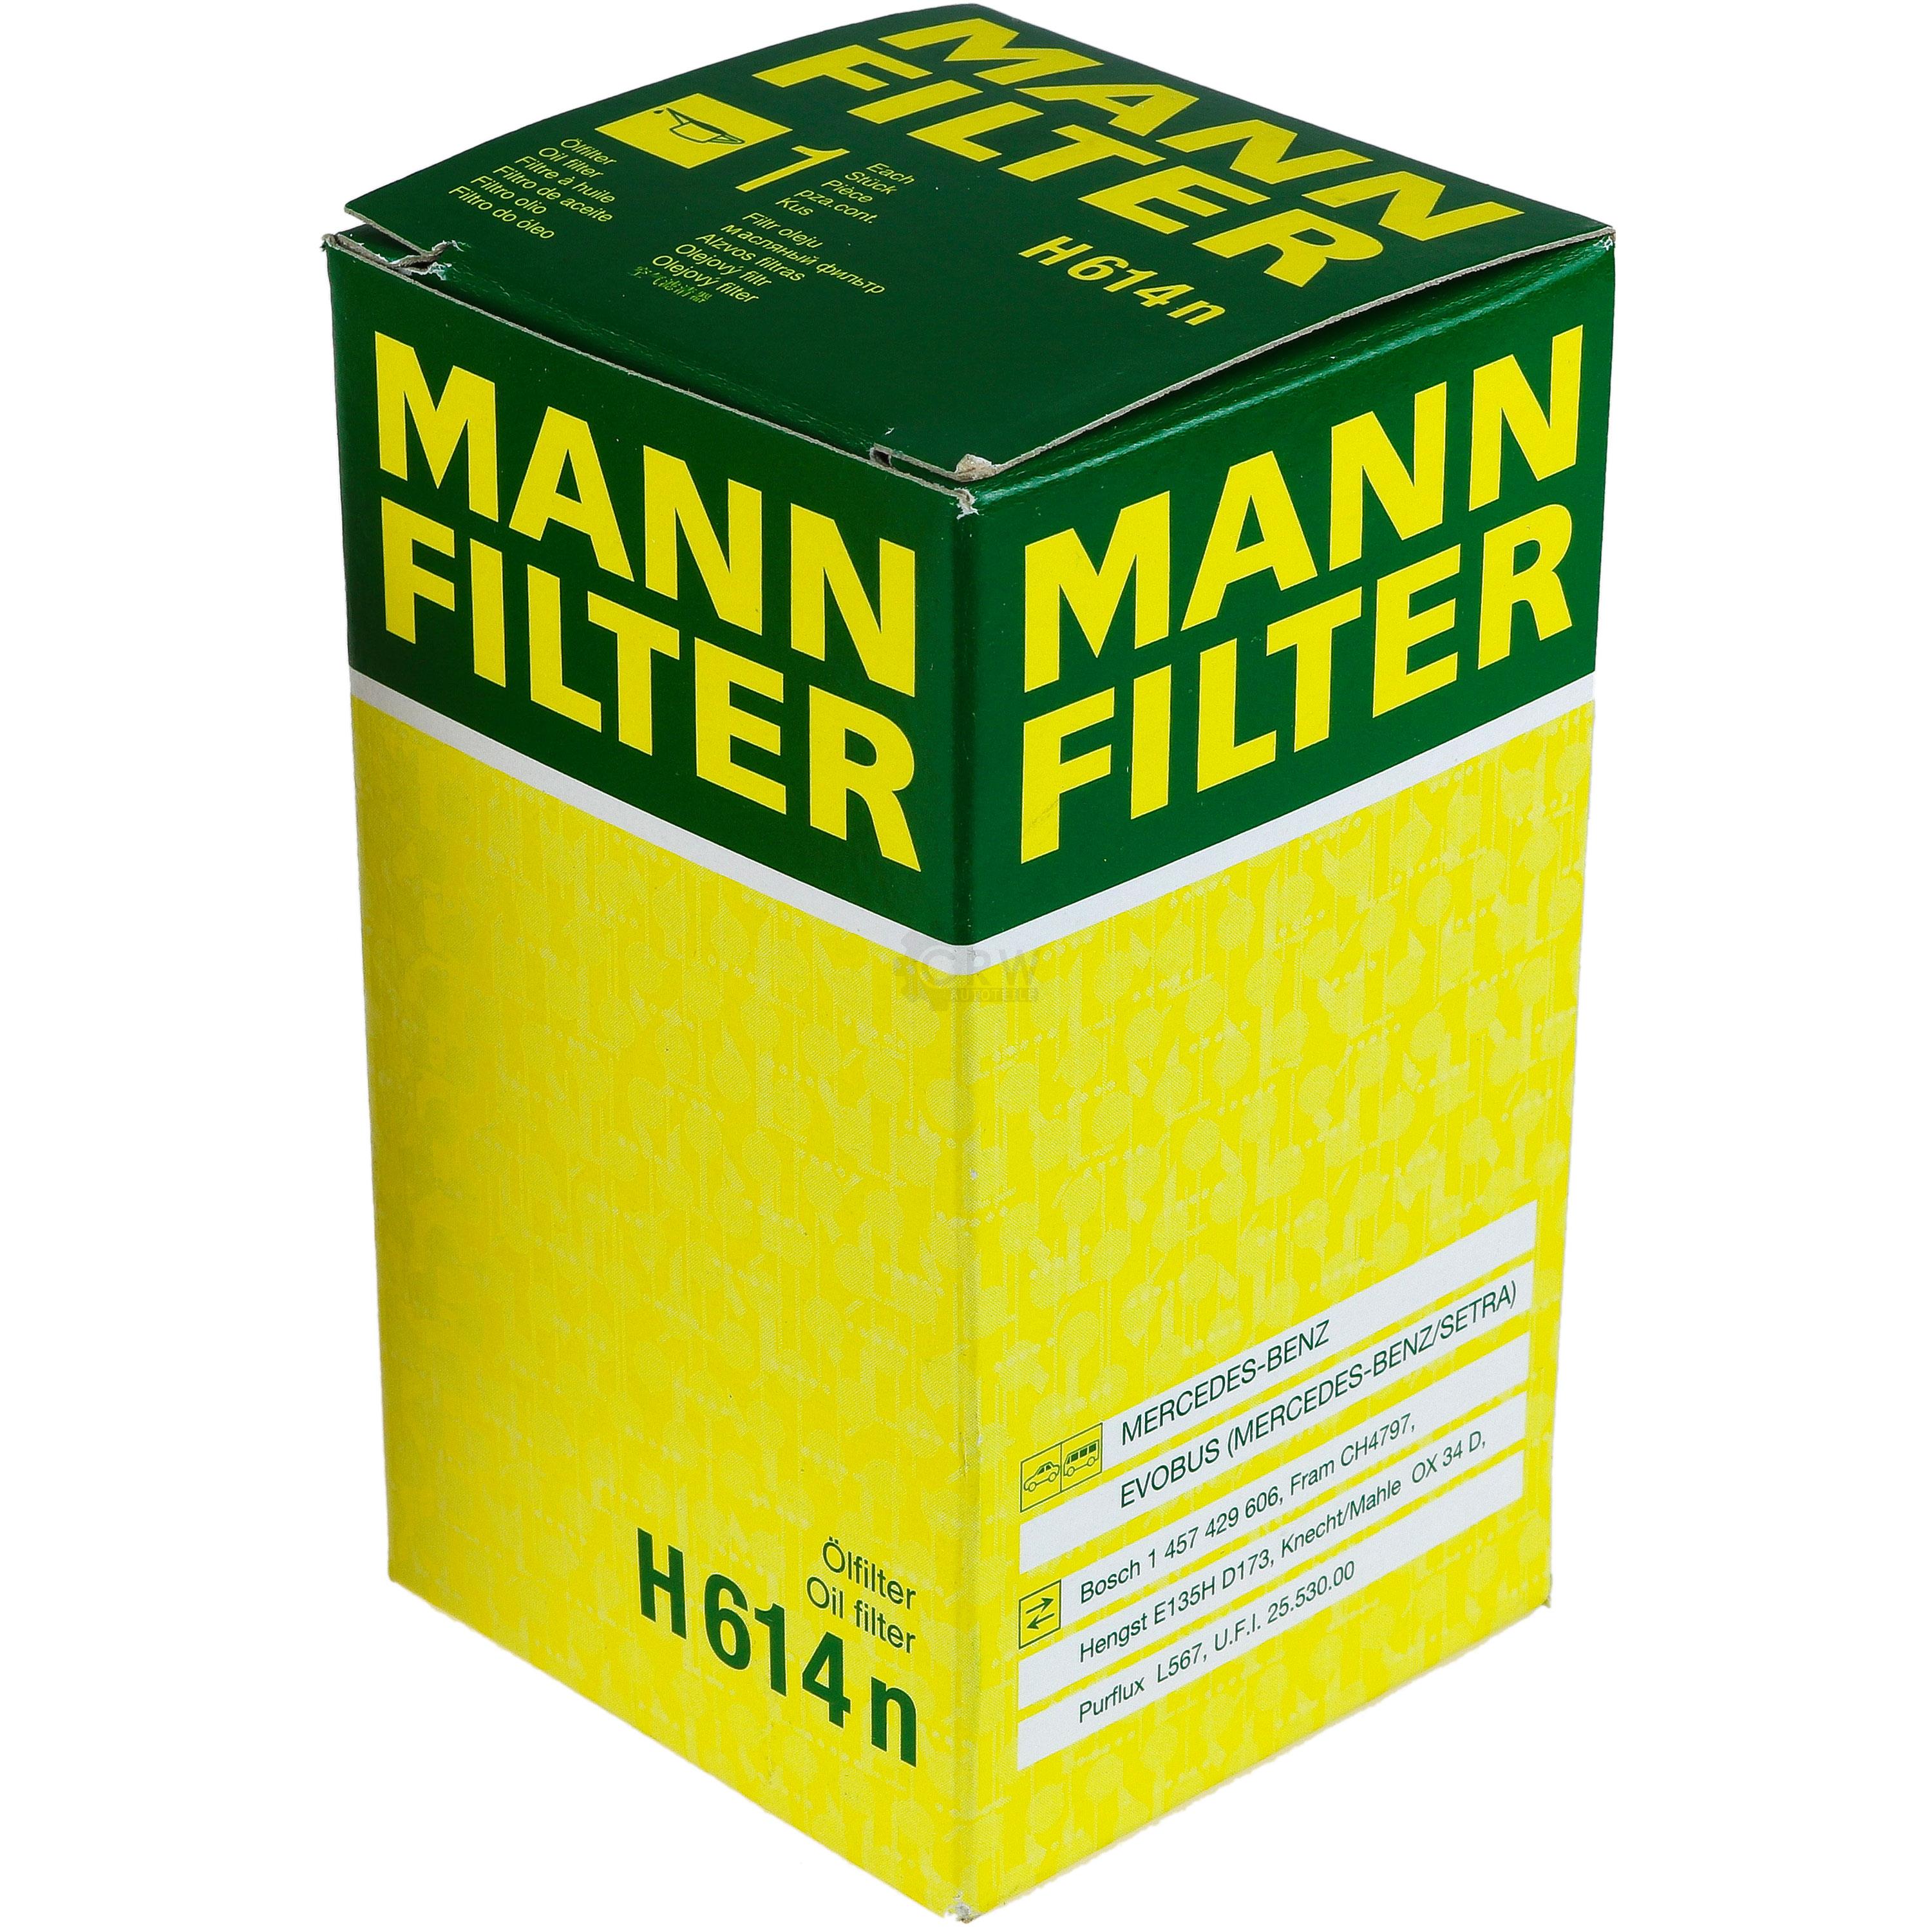 MANN-FILTER Ölfilter Oelfilter H 614 n Oil Filter